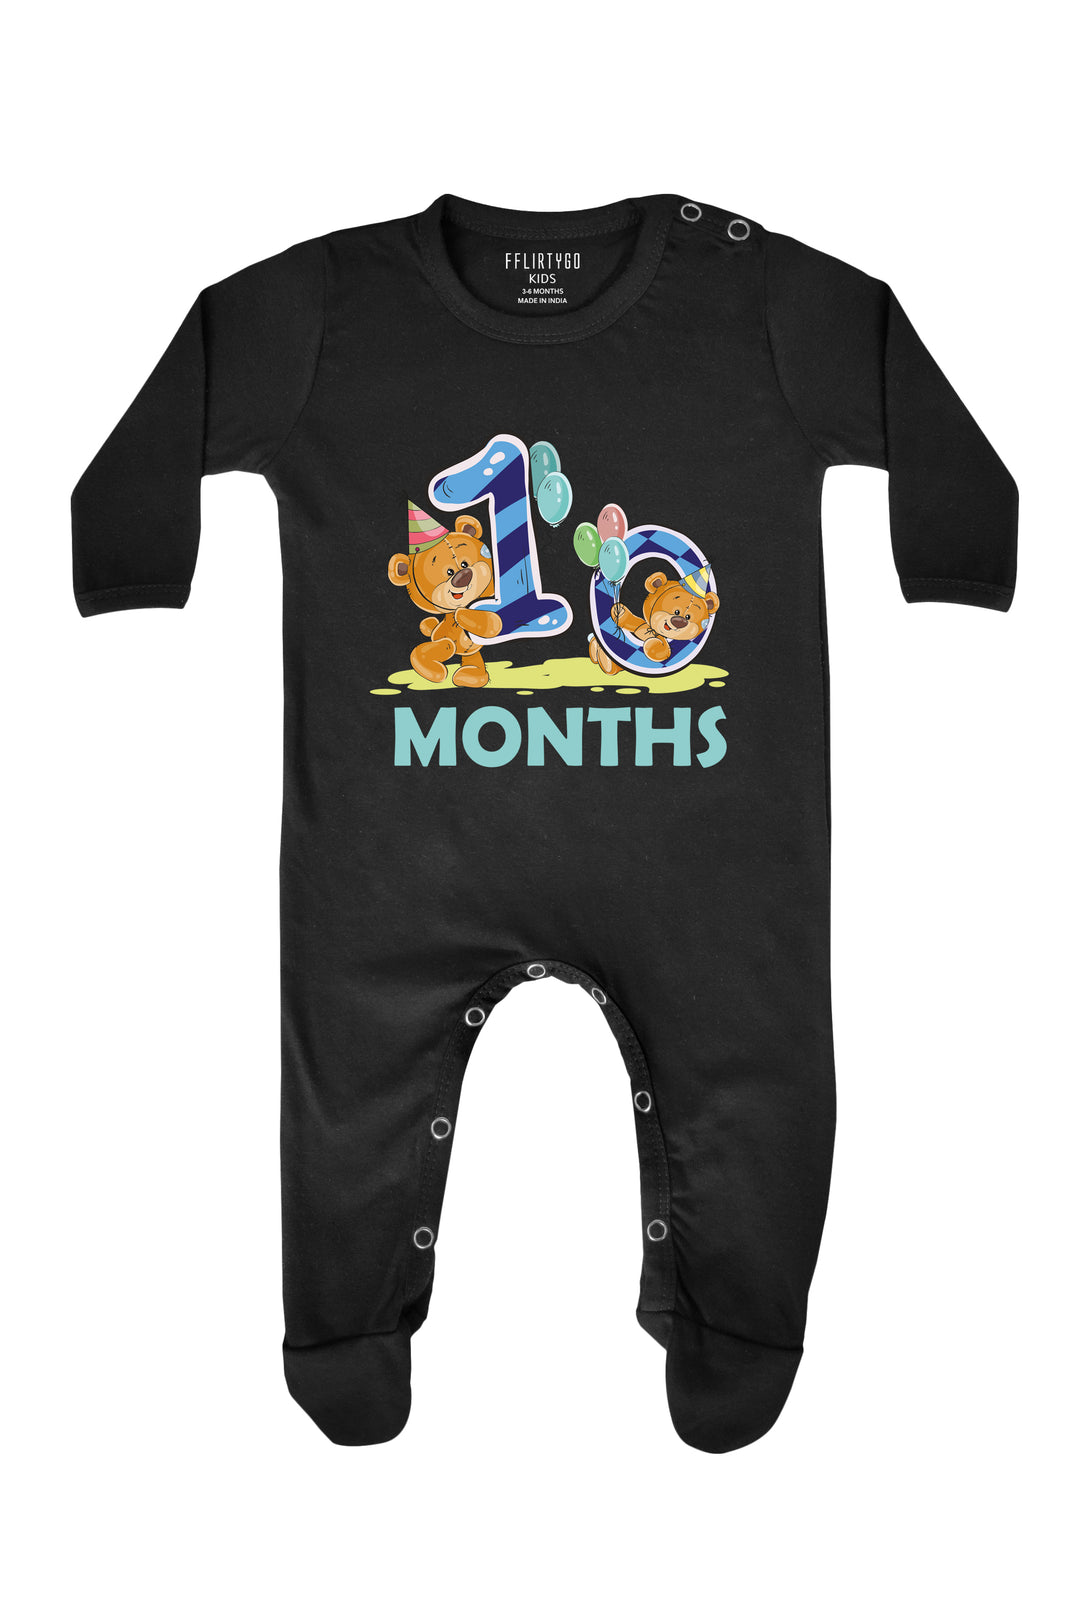 Ten Months Milestone Baby Romper | Onesies